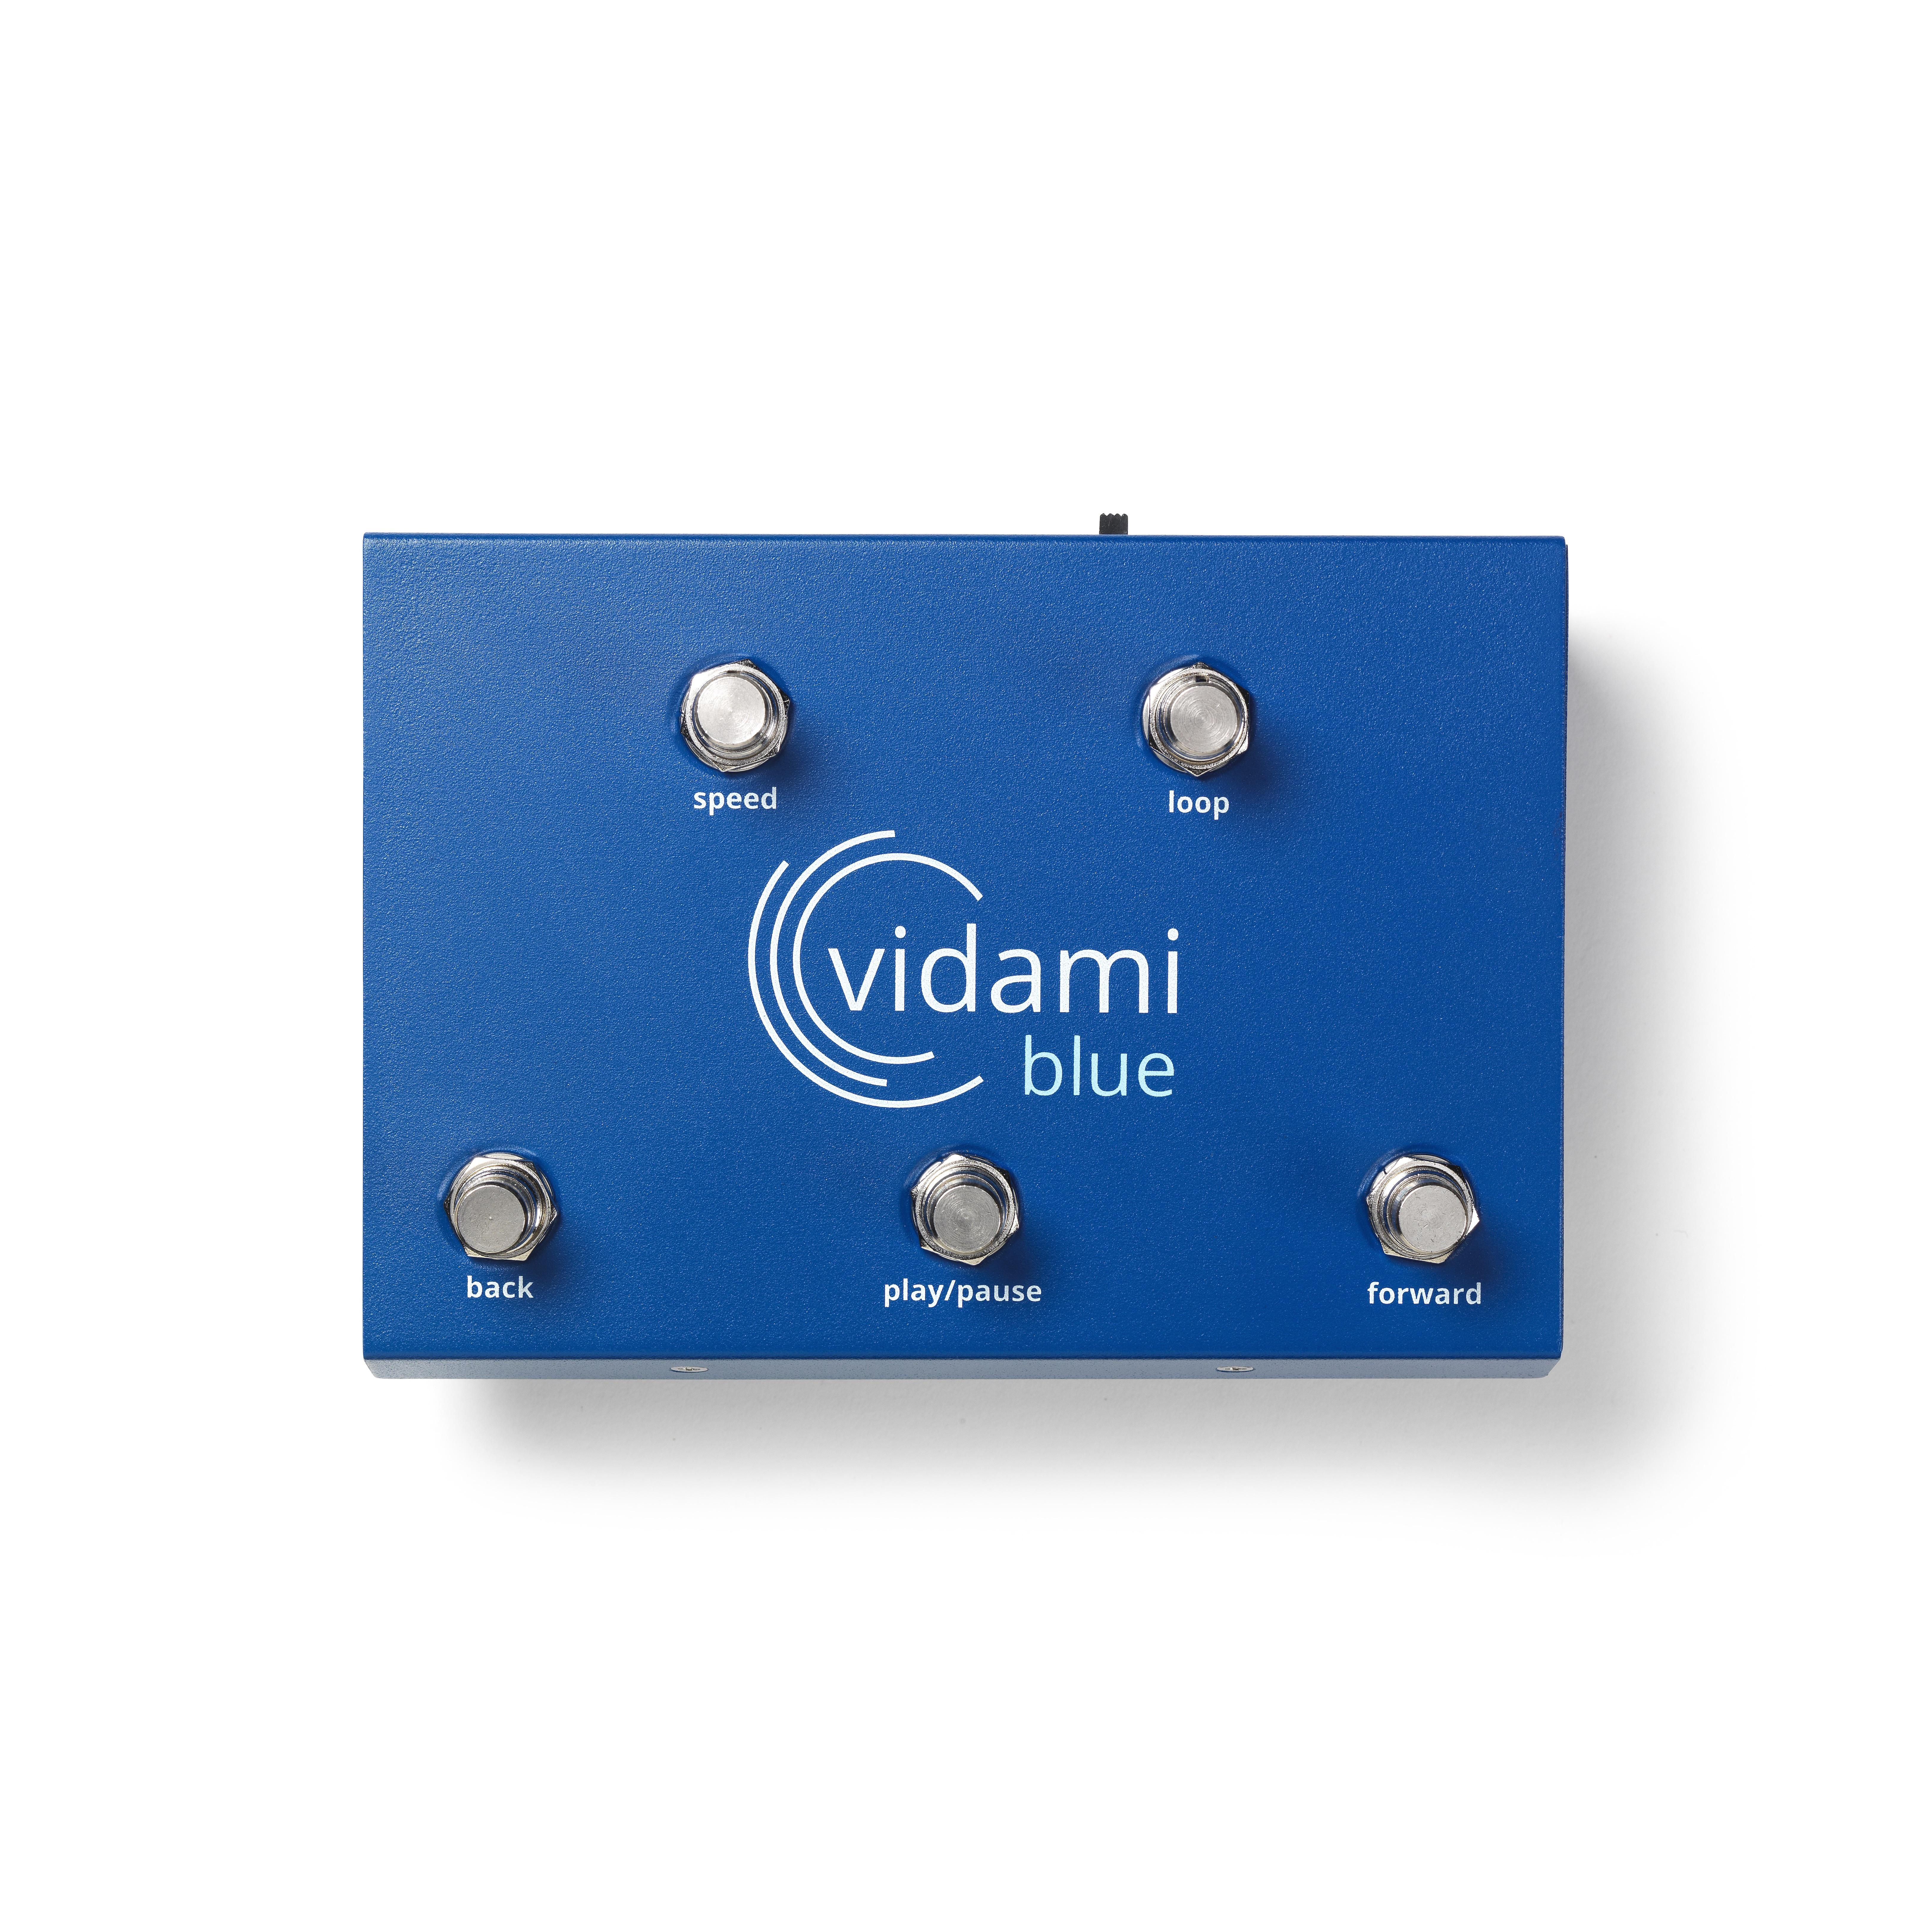 Vidami Announces the Vidami Blue Multi-Mode Controller